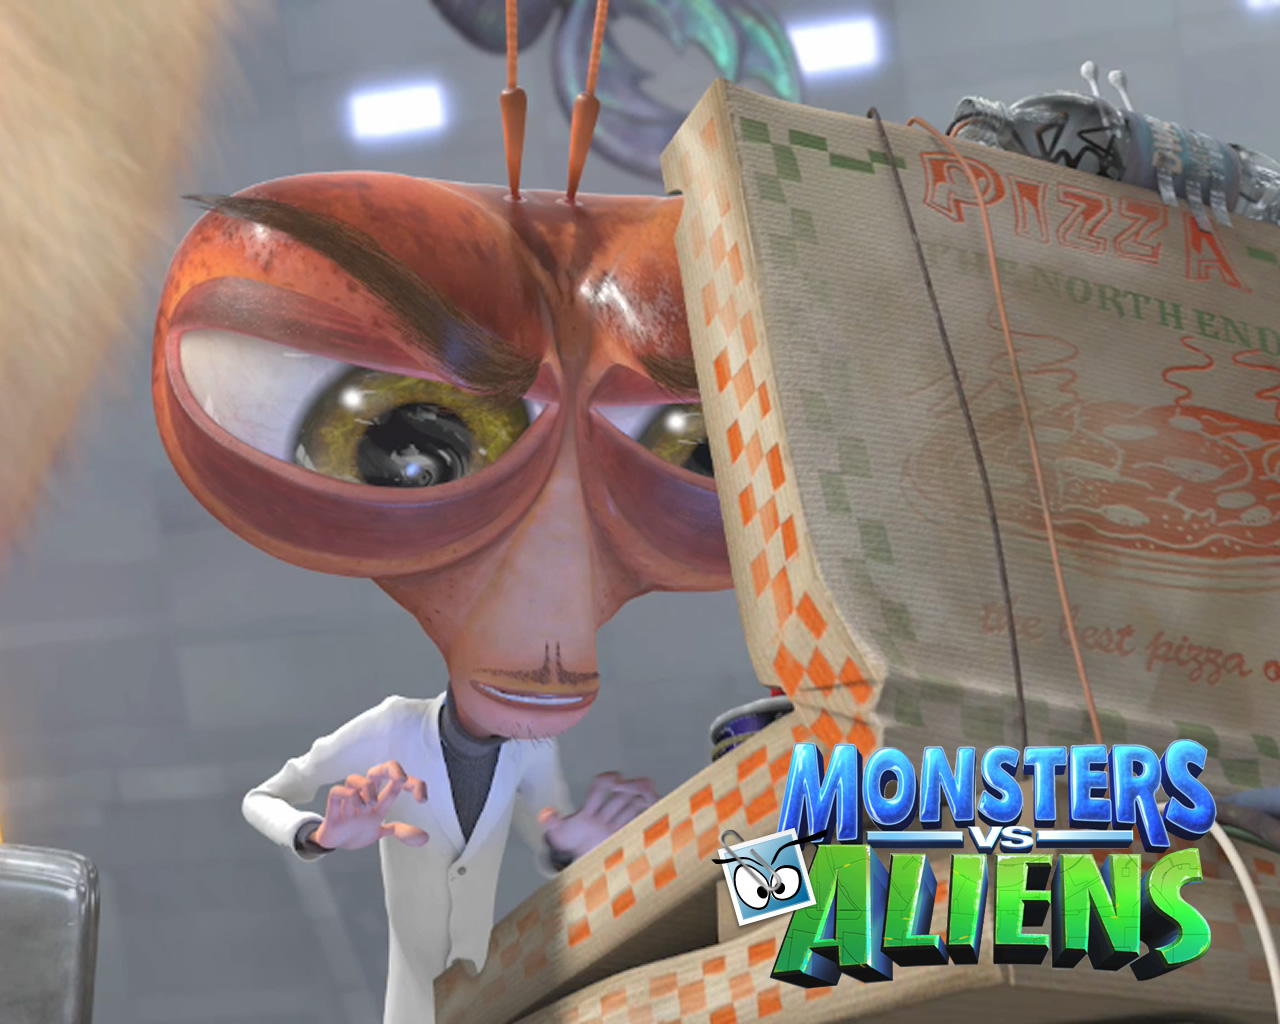 download wallpaper: Monsters vs Aliens wallpaper